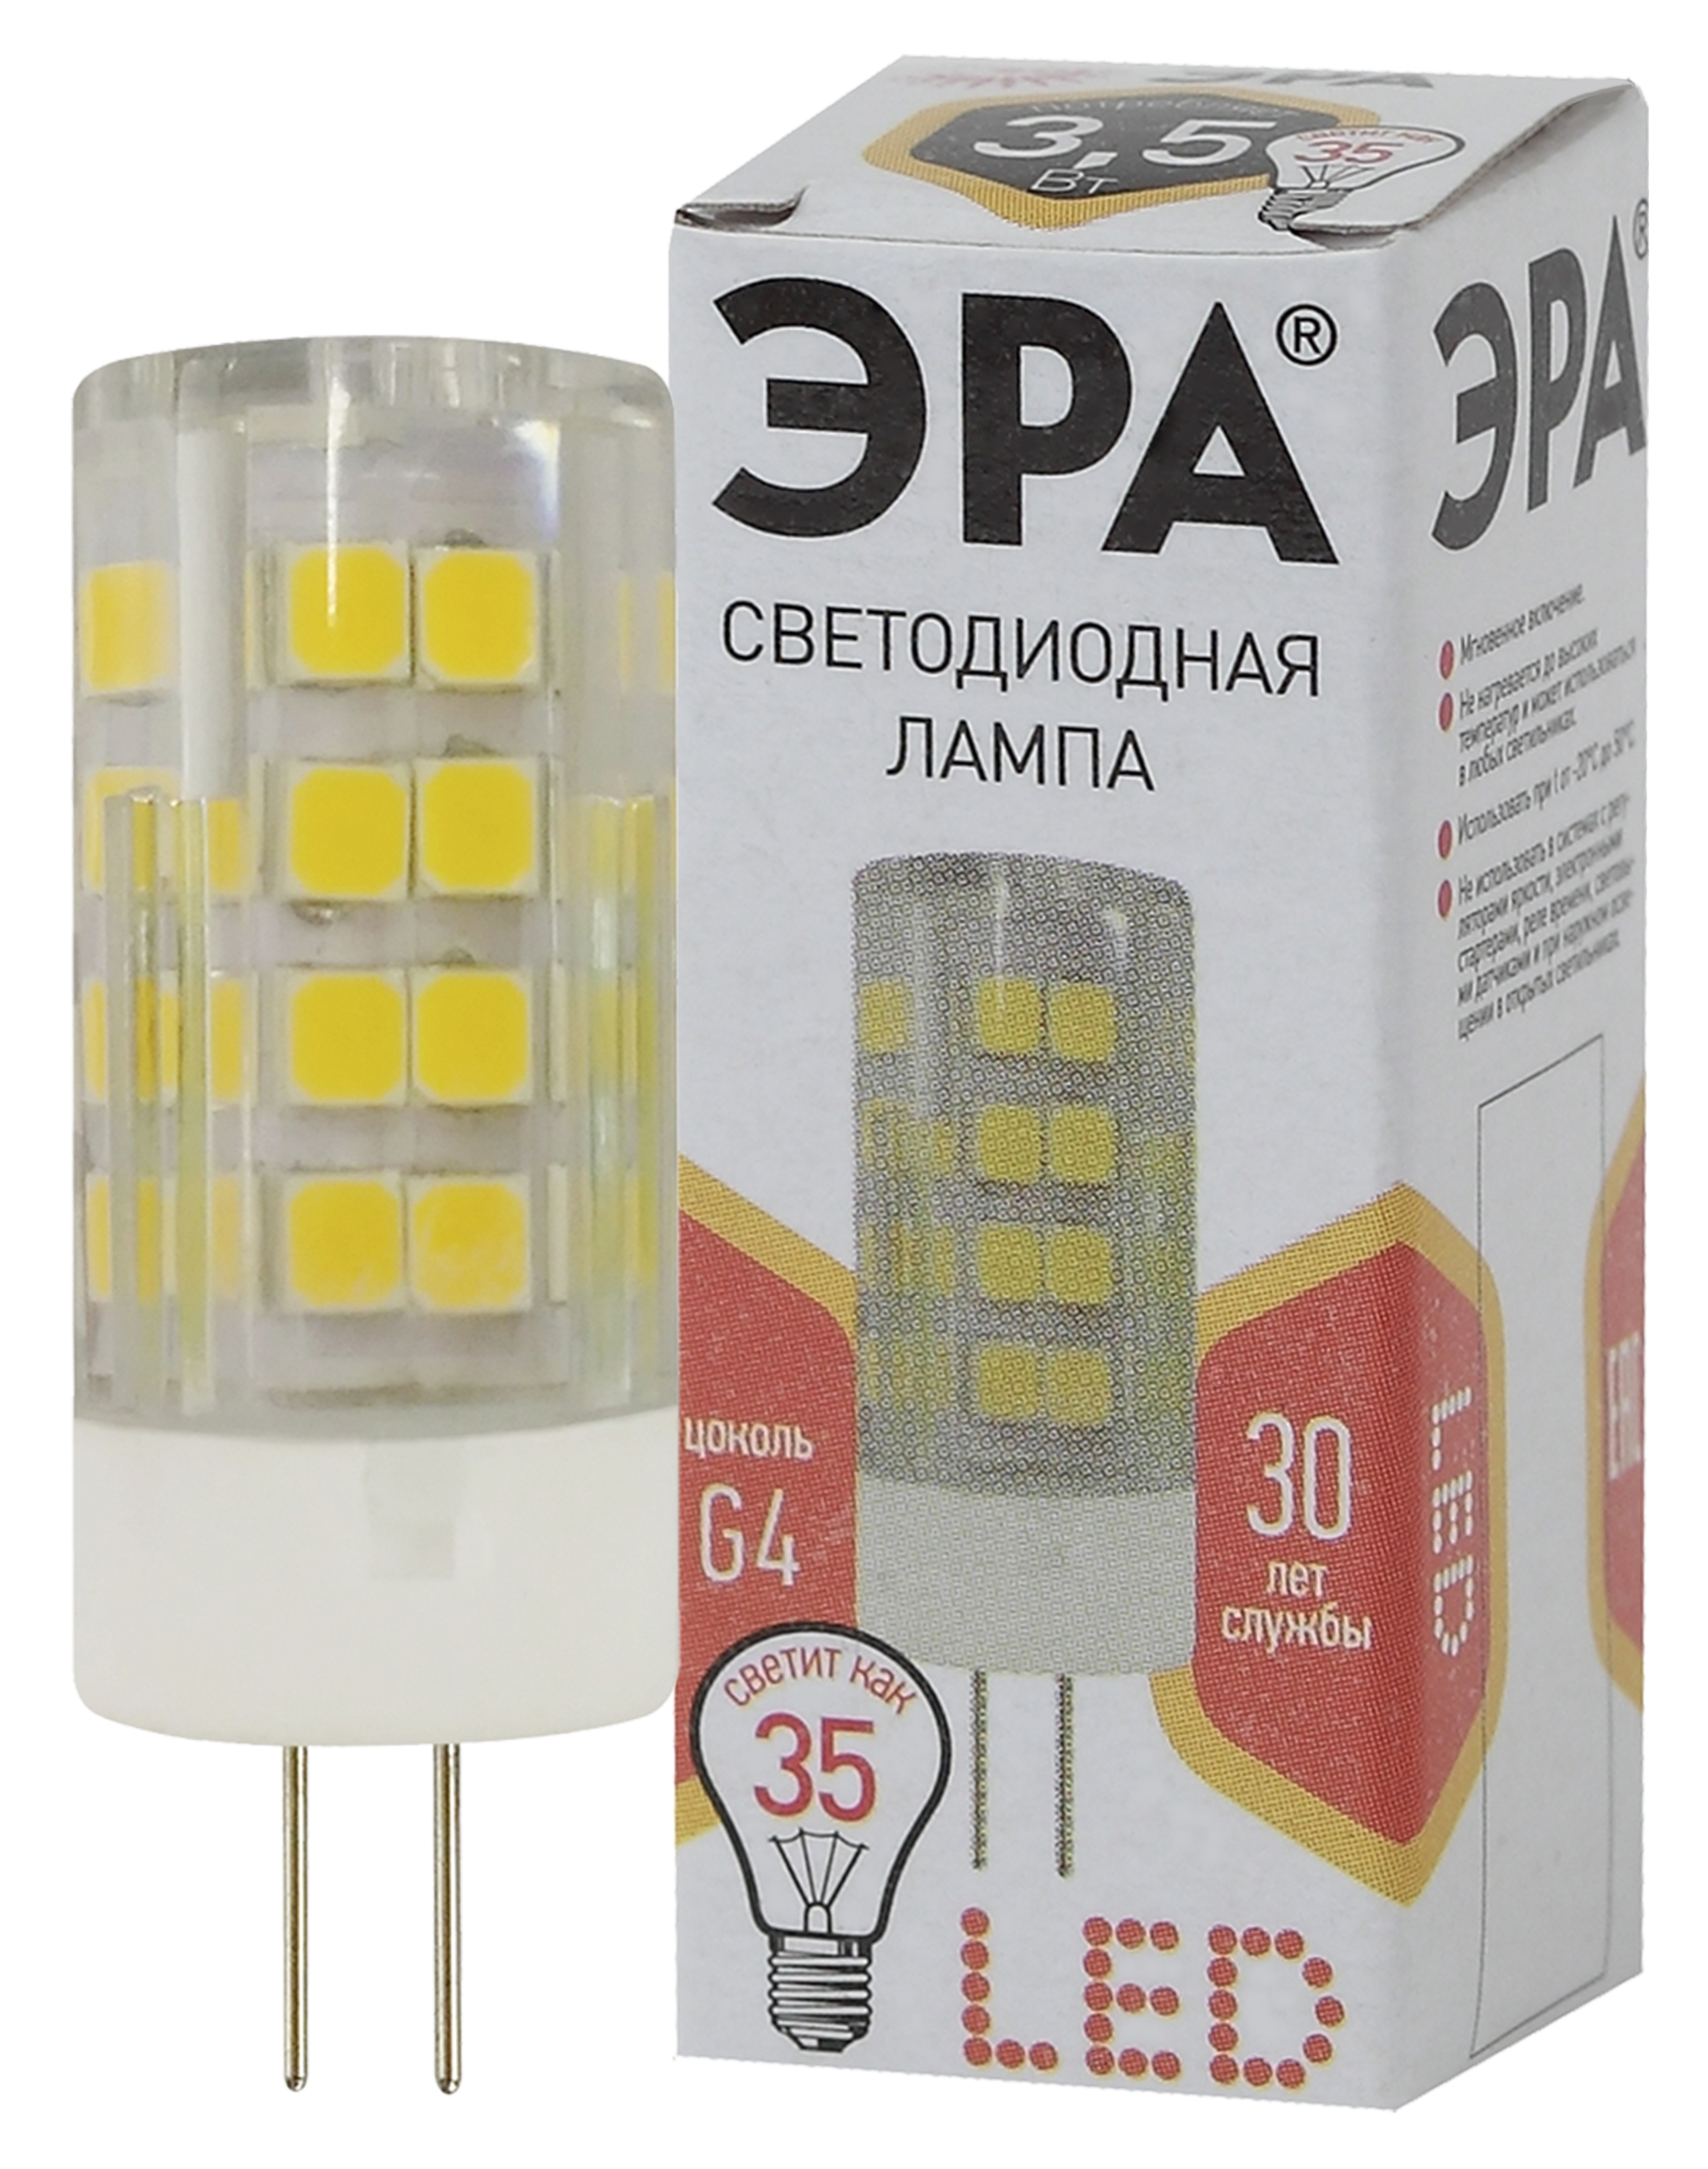 Лампа светодиодная JC-3.5w-220V-corn ceramics-827-G4 280лм ЭРА Б0027855